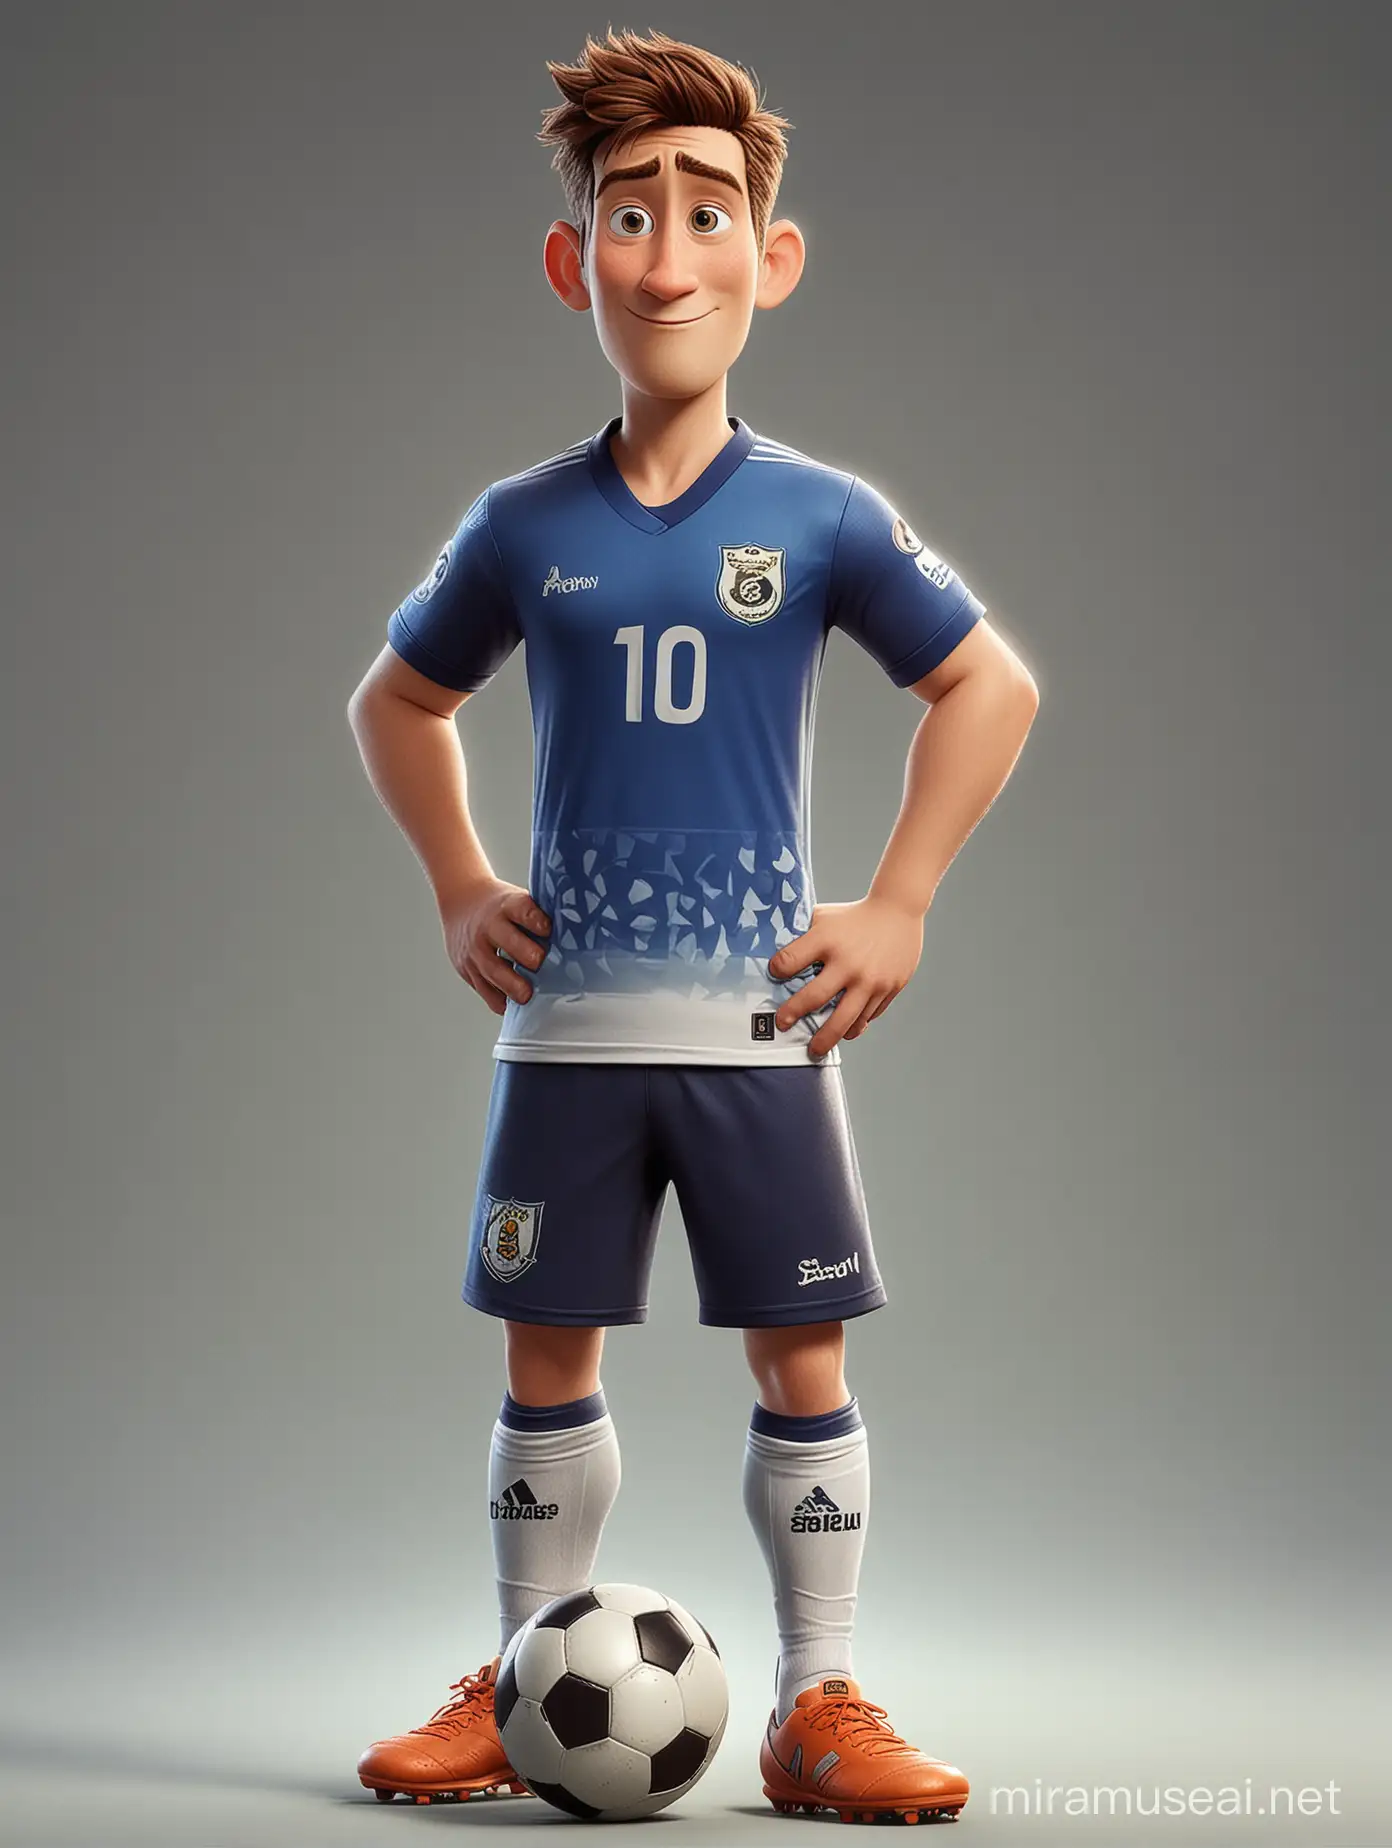 soccer player, Pixar and Disney Style Cartoon, Full Body